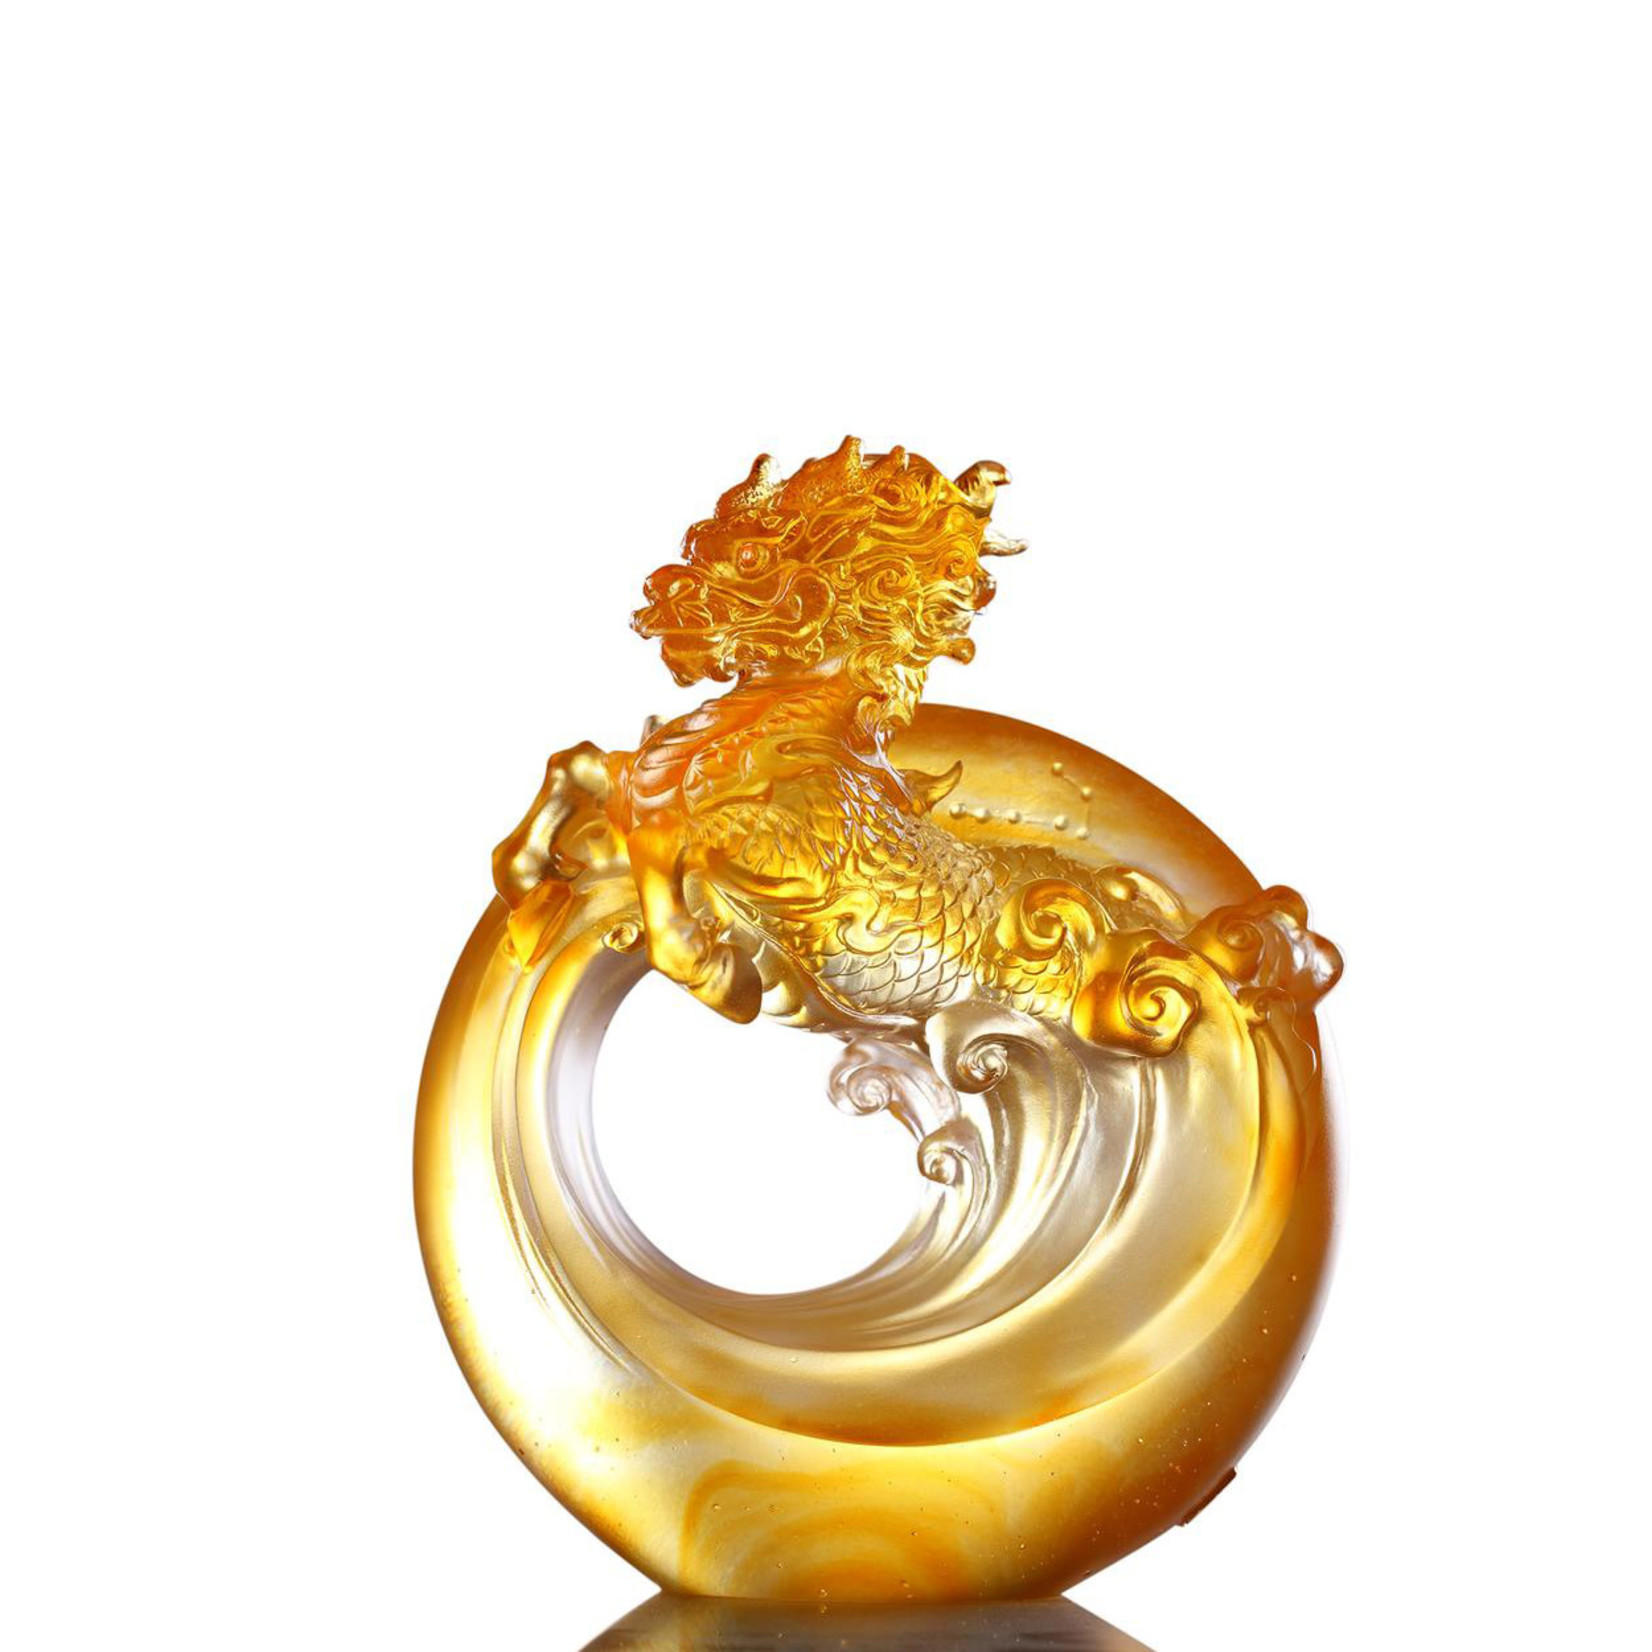 LIULI Crystal Art Crystal Qilin, the mythical creature - "Beauty" in Dark & Light Amber